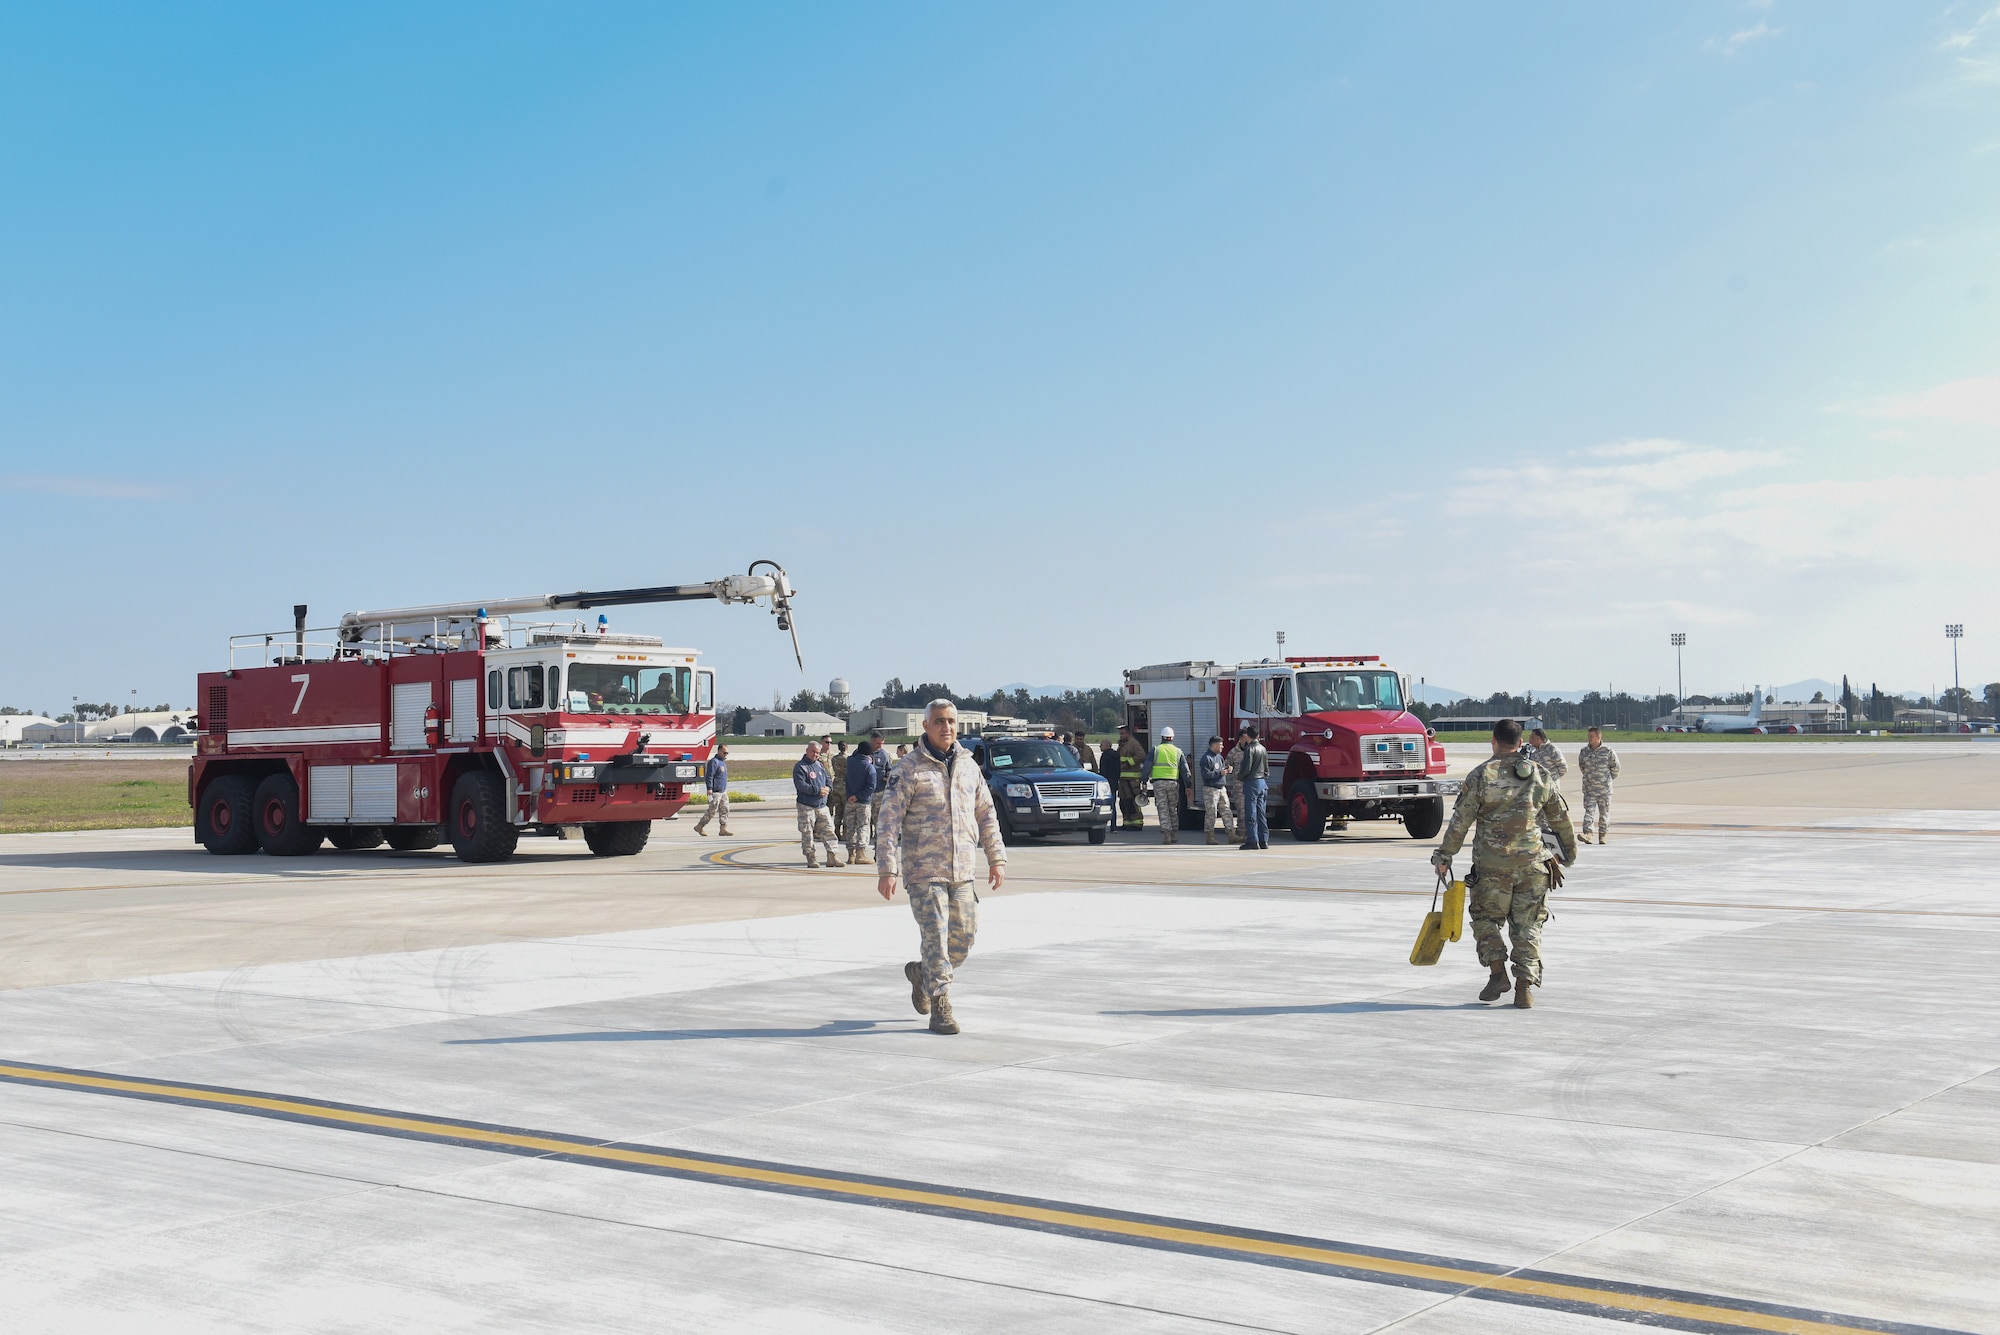 Turkish and American military members gathered around firetrucks on a flight line